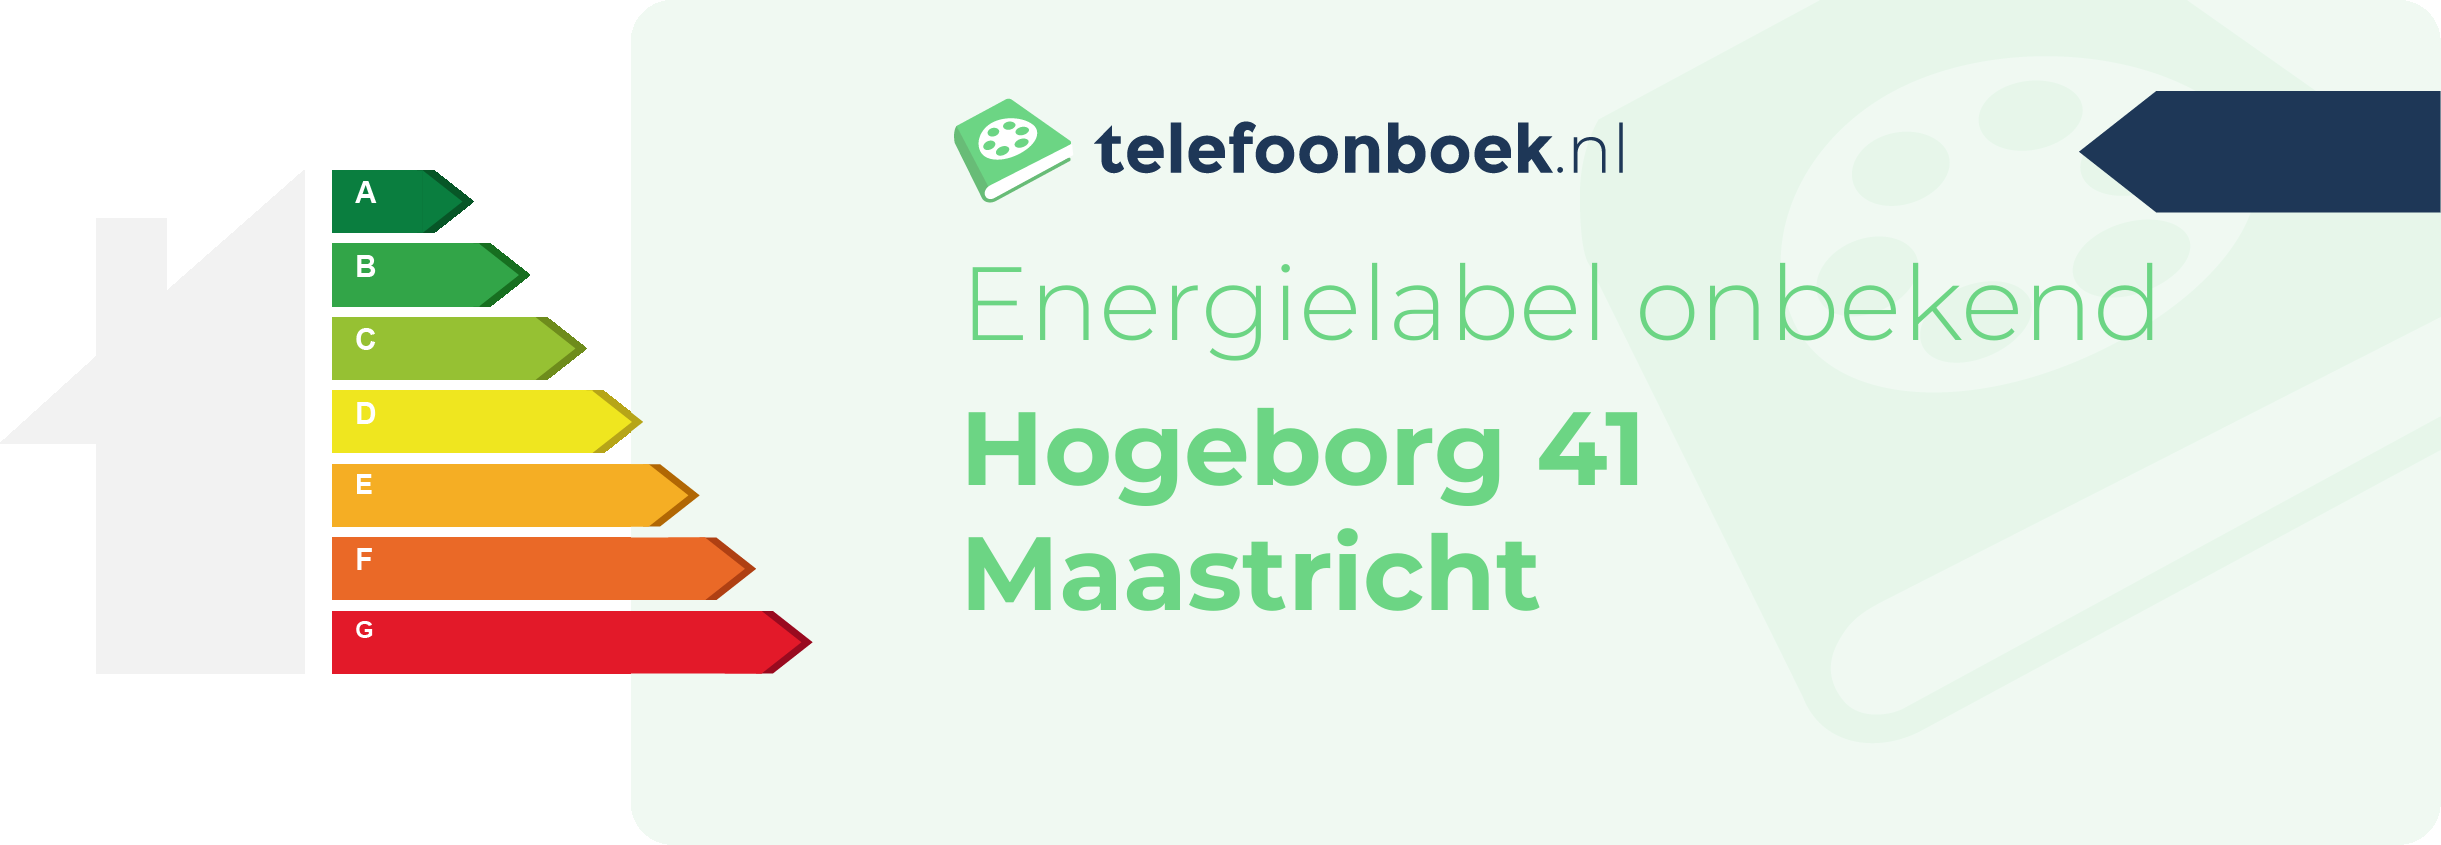 Energielabel Hogeborg 41 Maastricht